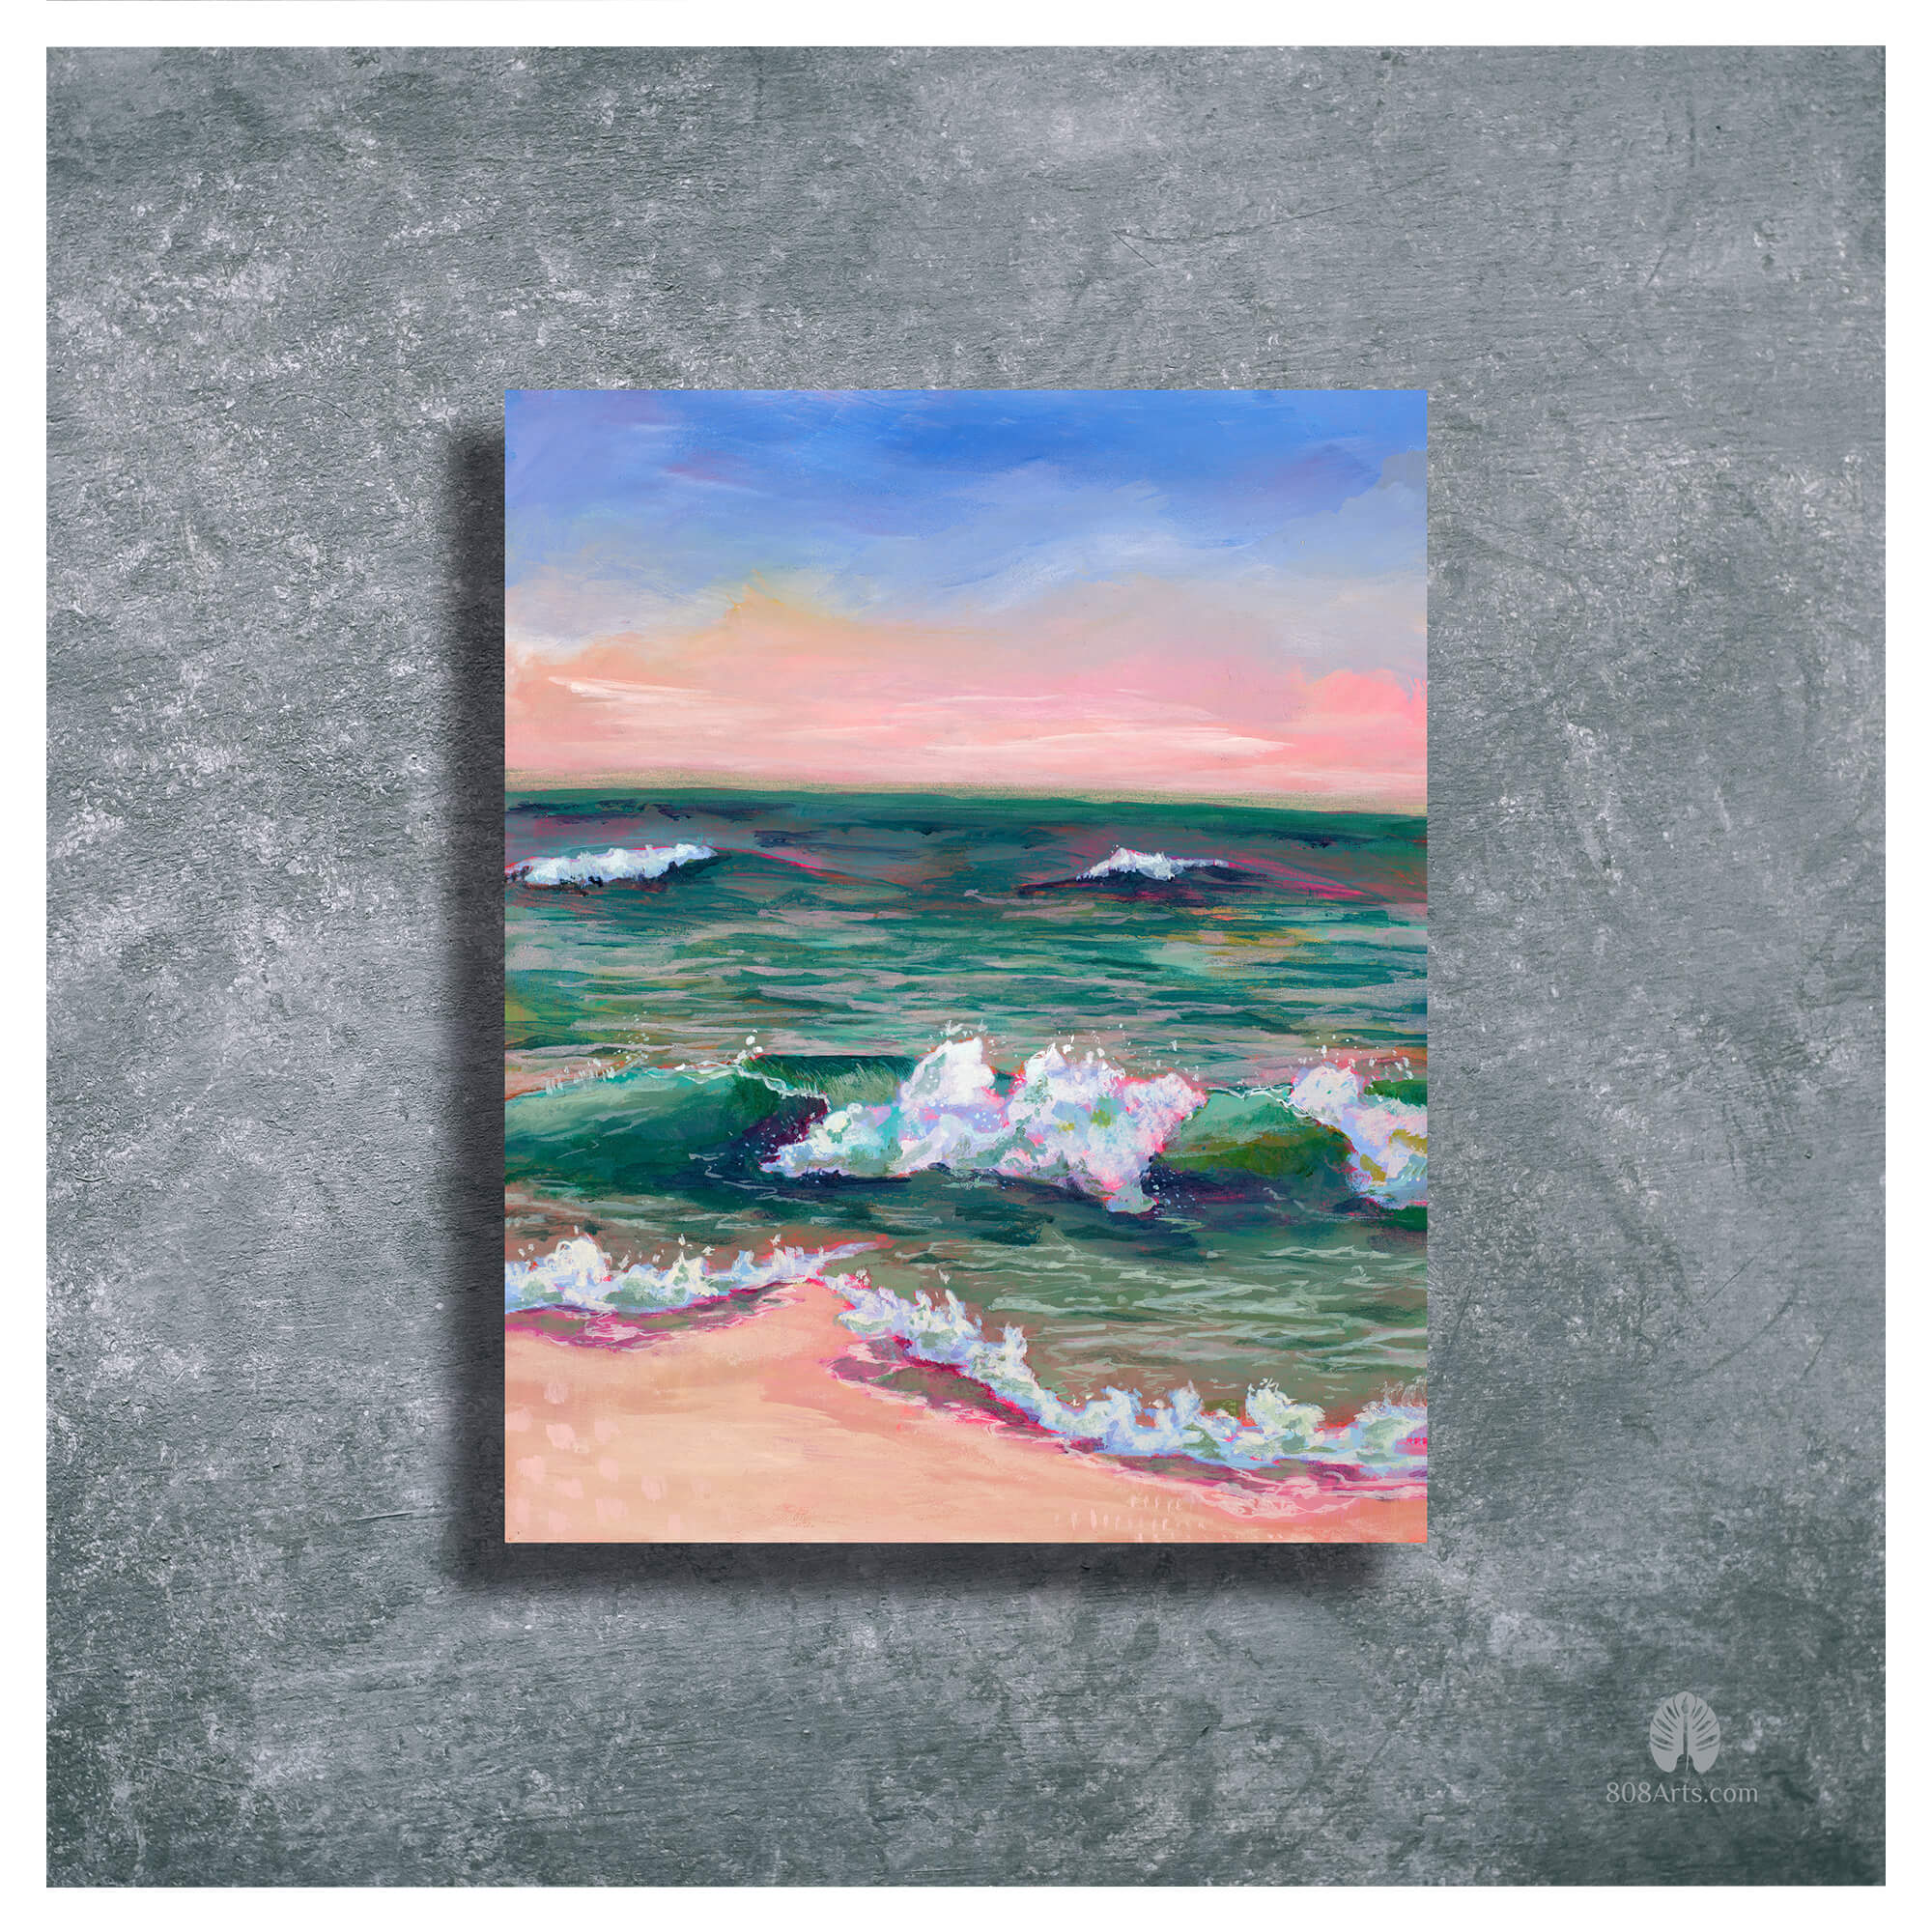 Pastel hued seascape and horizon by Hawaii artist Lindsay Wilkins